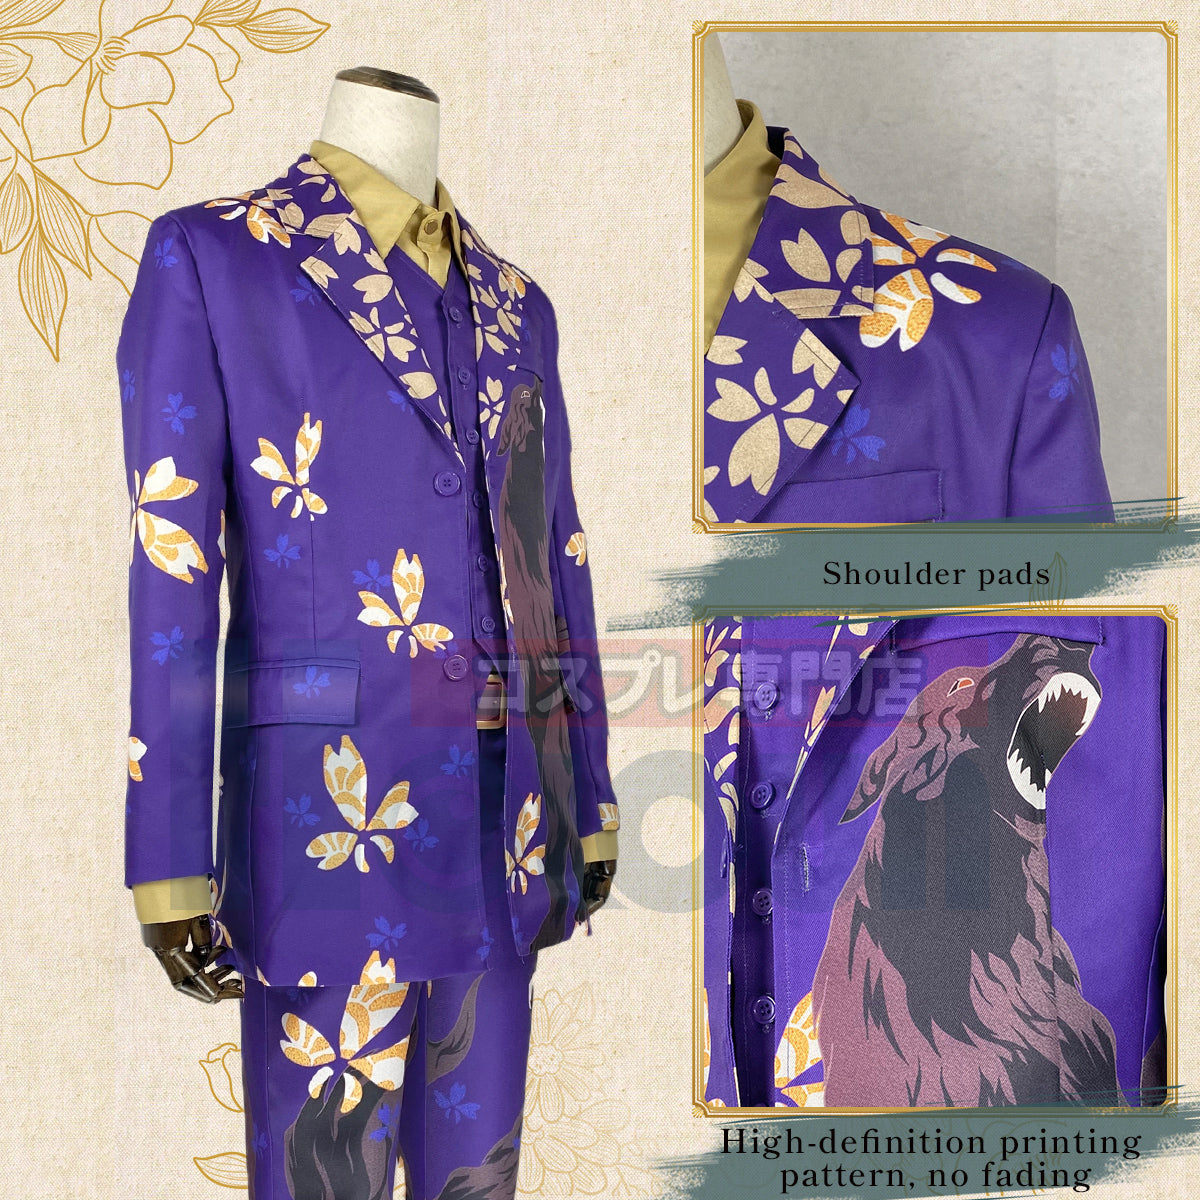 HOLOUN Tokyo Anime Cosplay Costume Exhibition Suit Keisuke Baji Uniform Casual Wearing Purple Wolf Halloween Christmas Gift